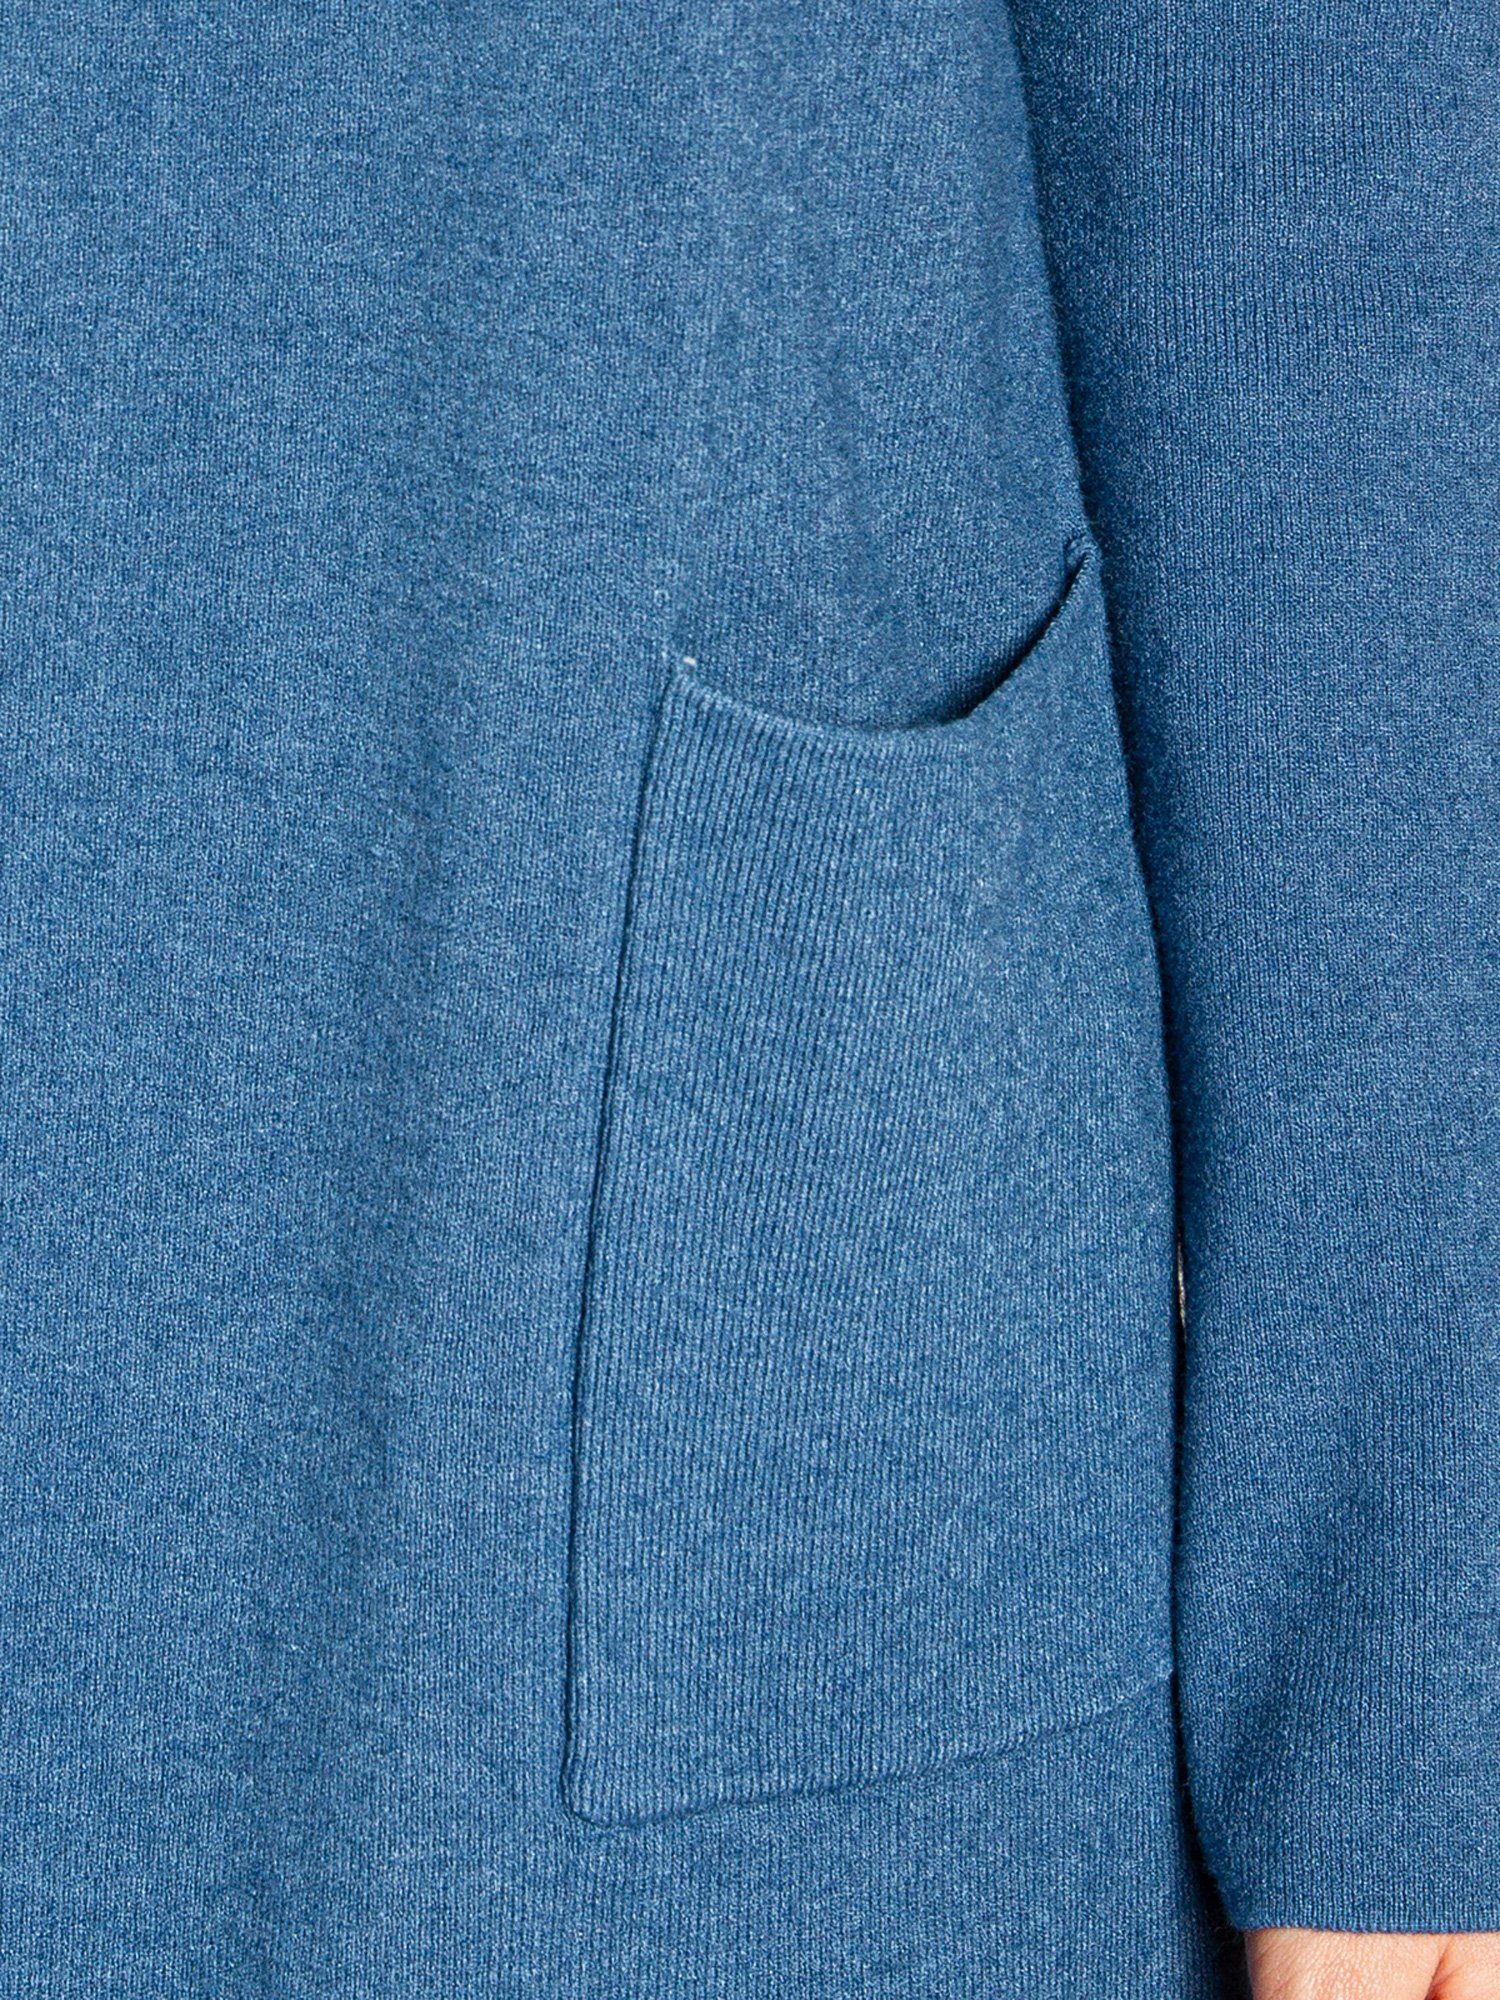 jeans Damen eleganter blau STJ023 sportlich Cardigan Caspar Strickjacke langer